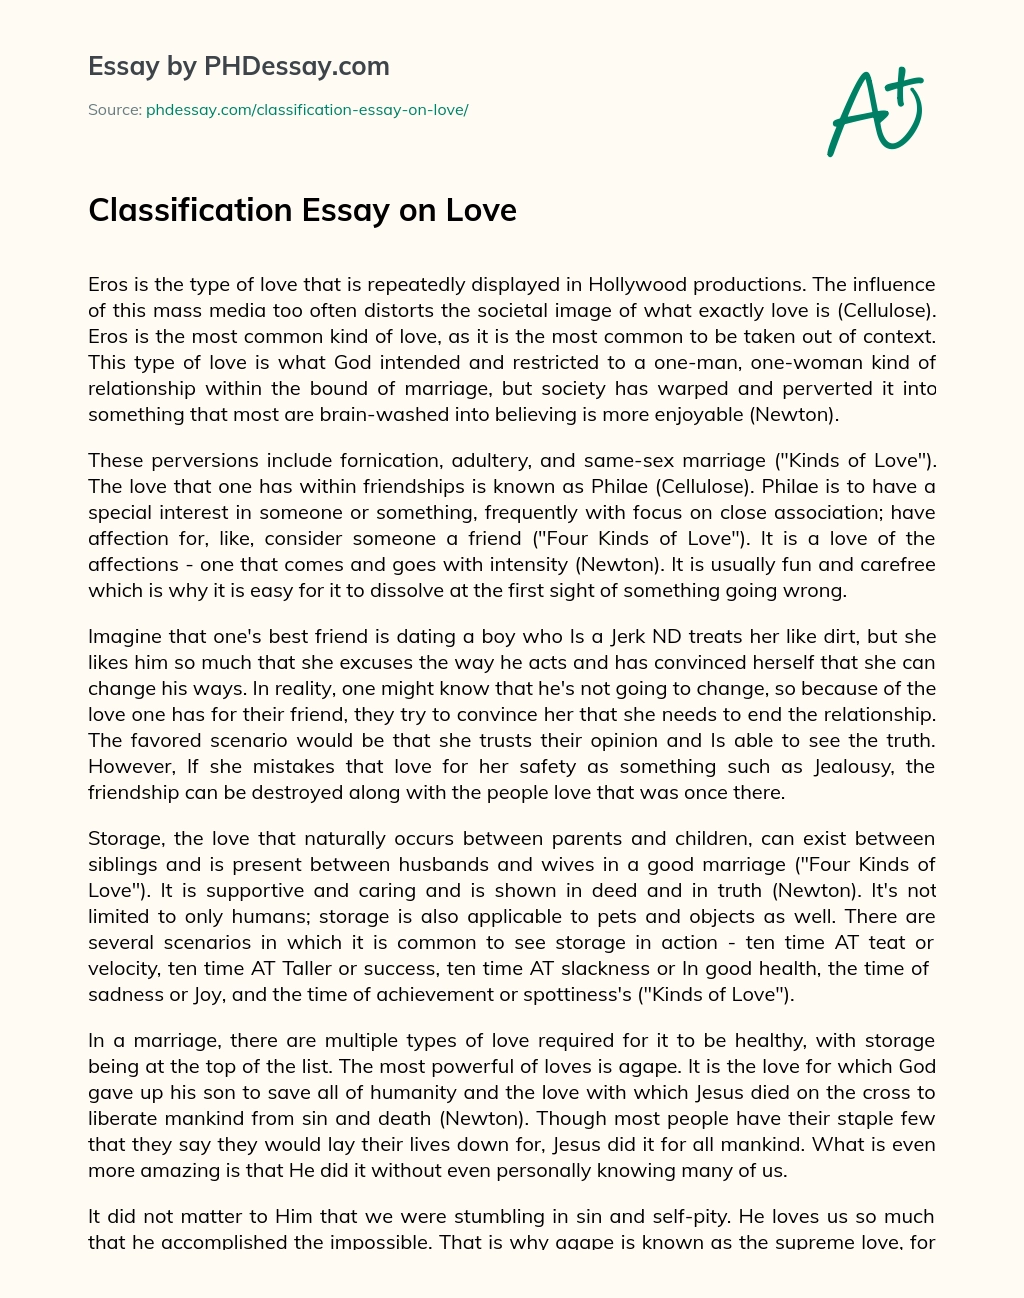 Classification Essay on Love essay